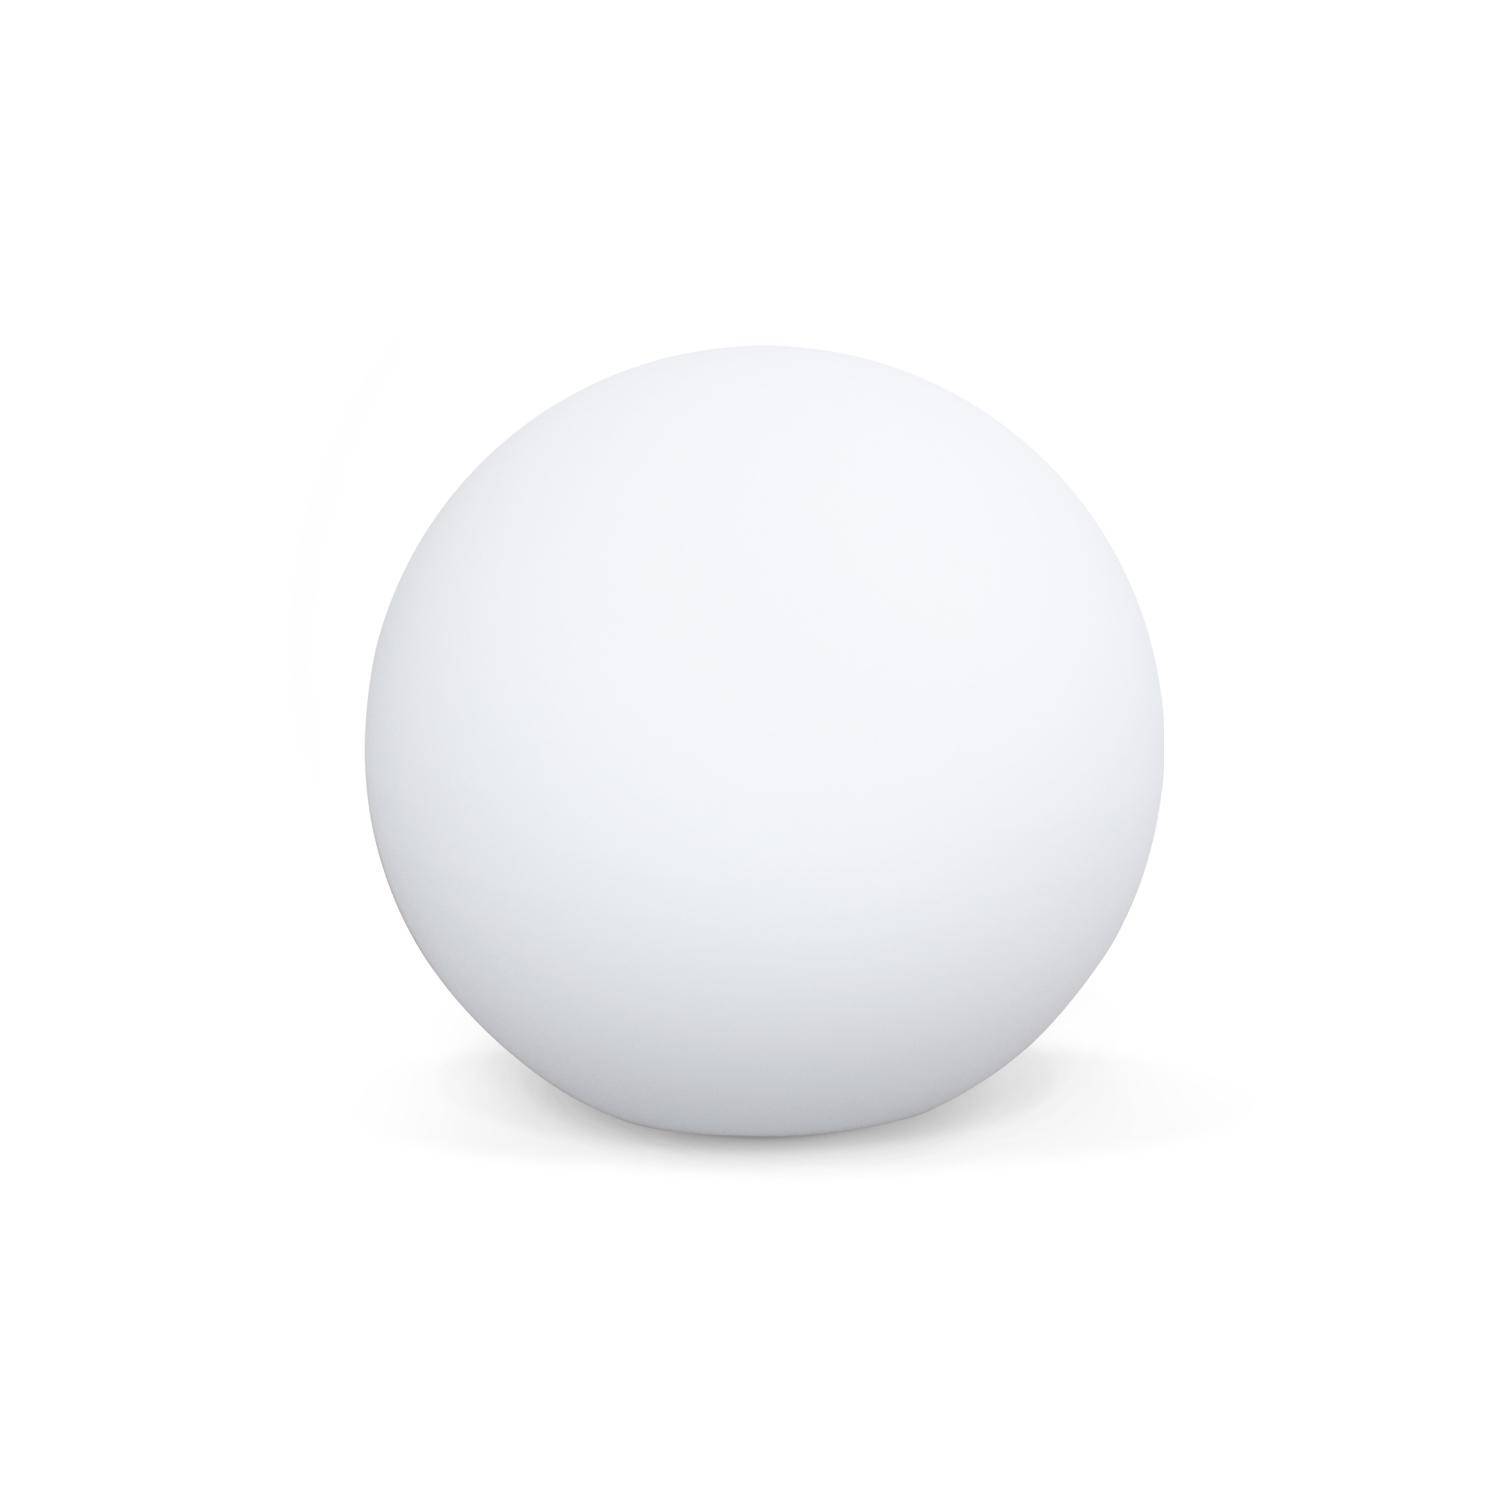 30cm spherical LED lamp – Decorative light sphere, remote control, Warm white,sweeek,Photo3